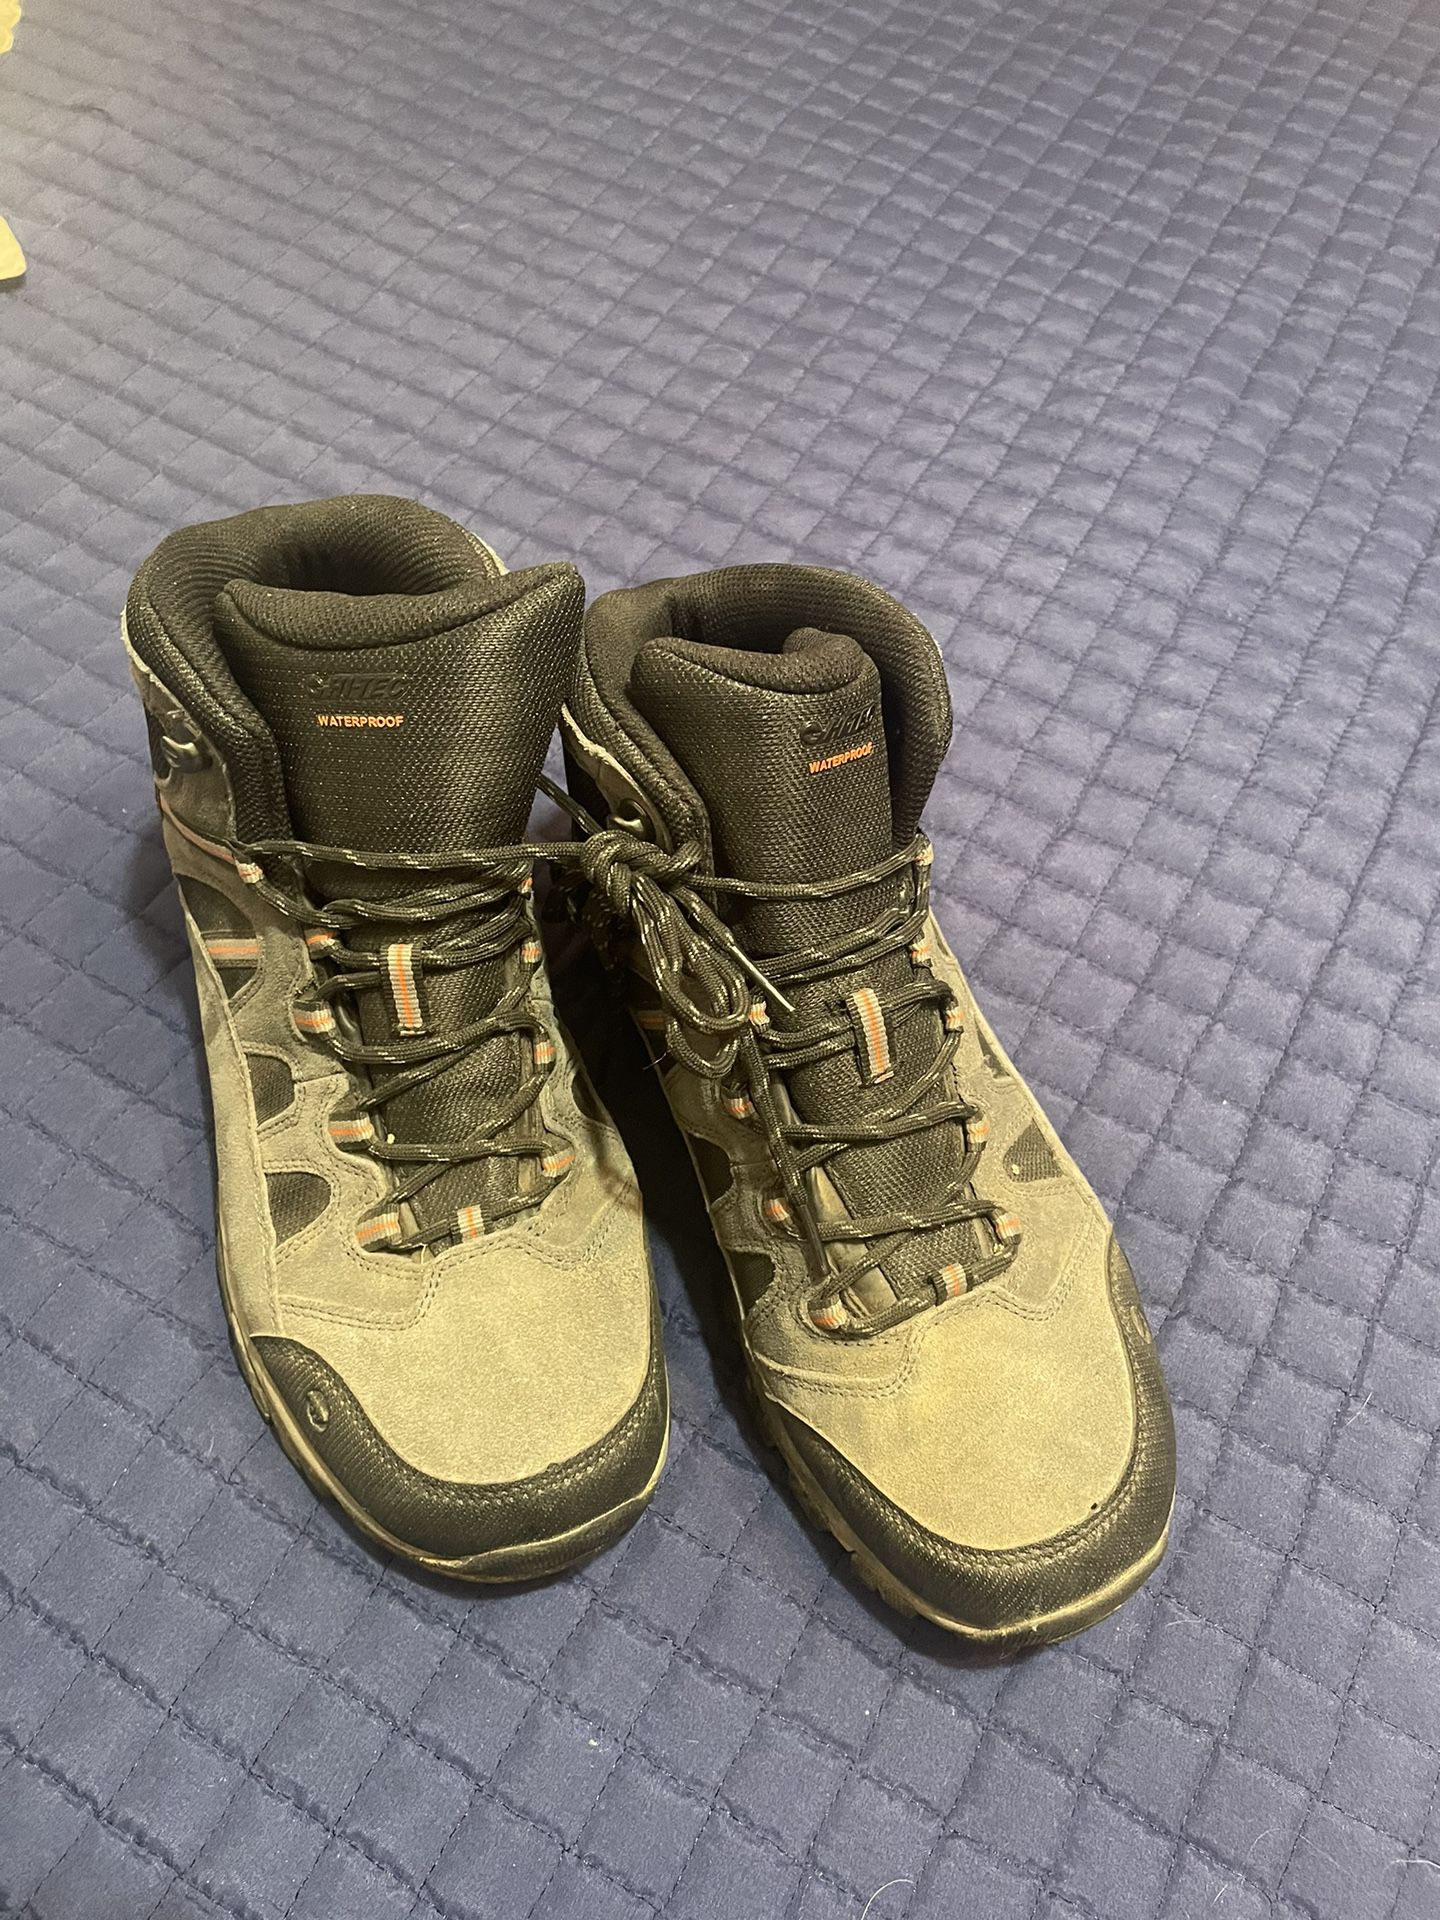 Hi Tech Waterproof Men’s Hiking Boots